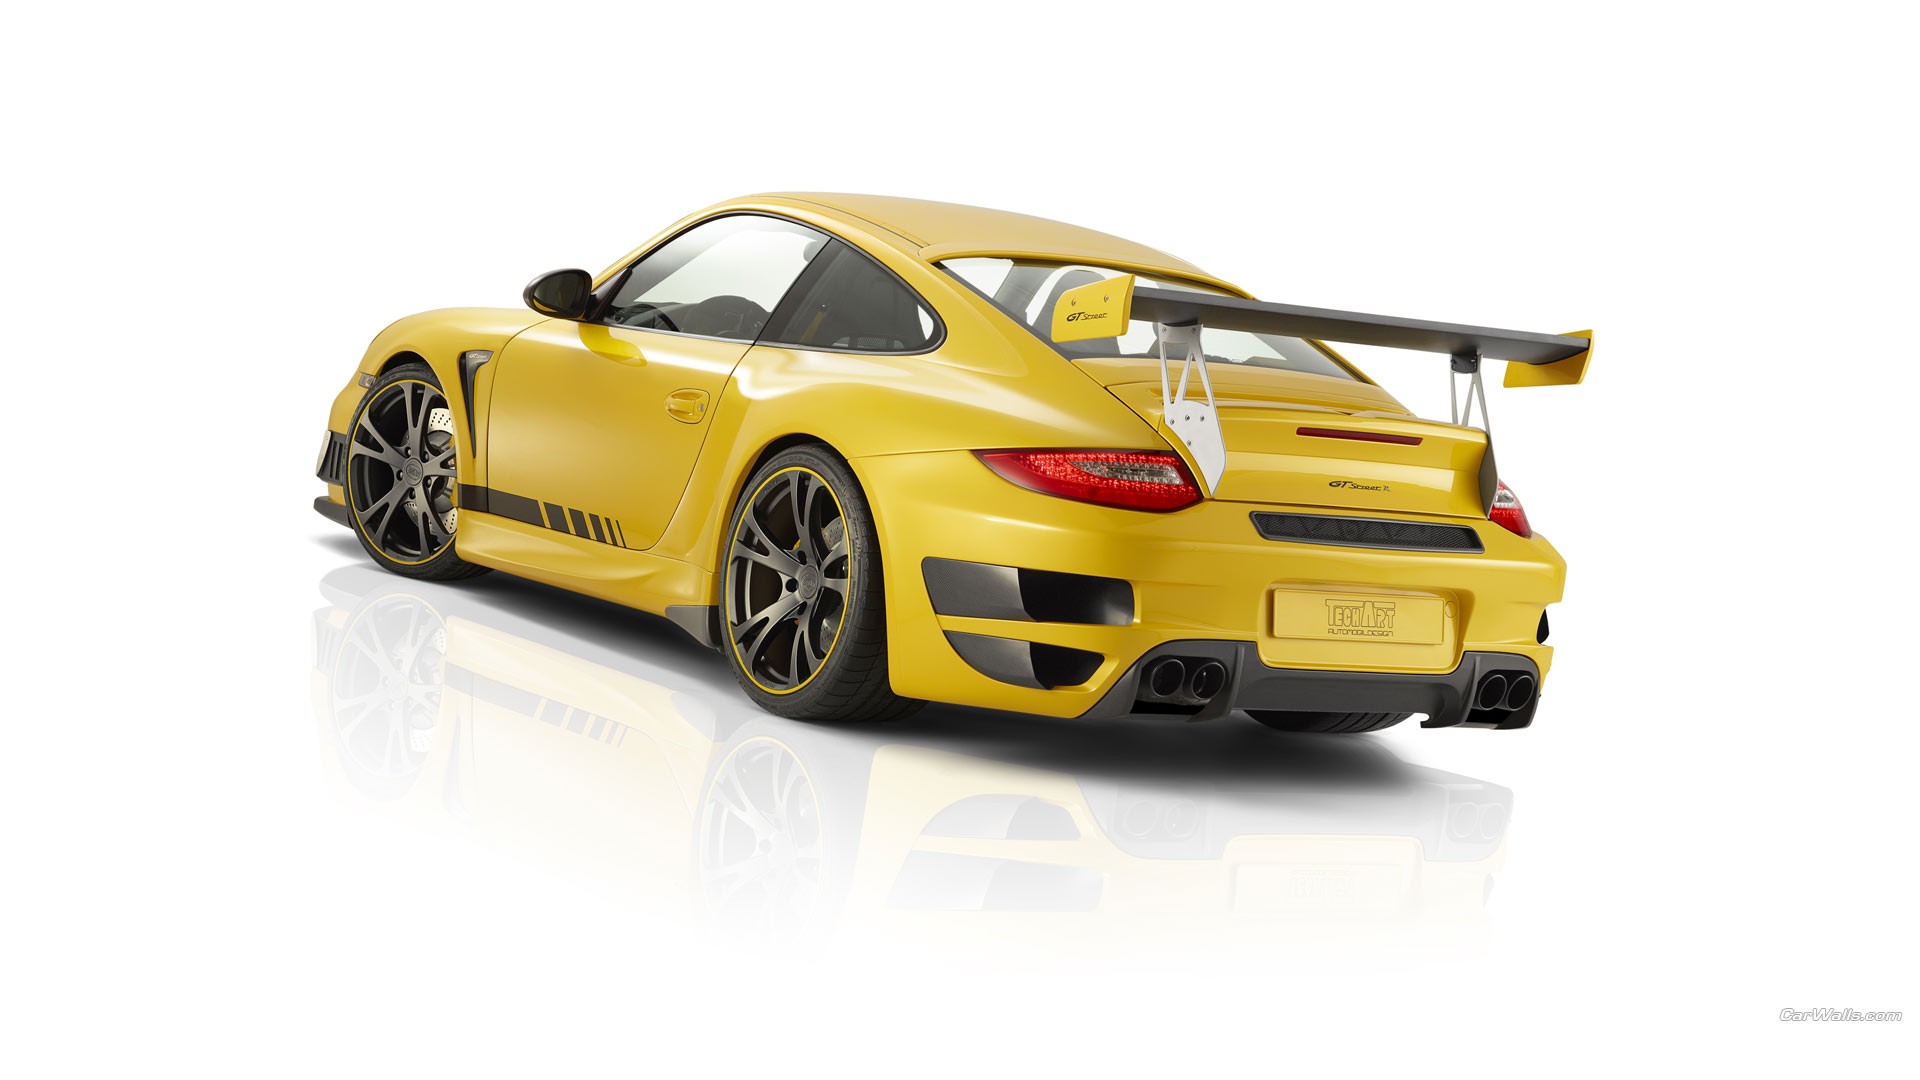 General 1920x1080 Porsche 911 car yellow cars Porsche 997 watermarked Porsche car spoiler German cars Volkswagen Group TechArt